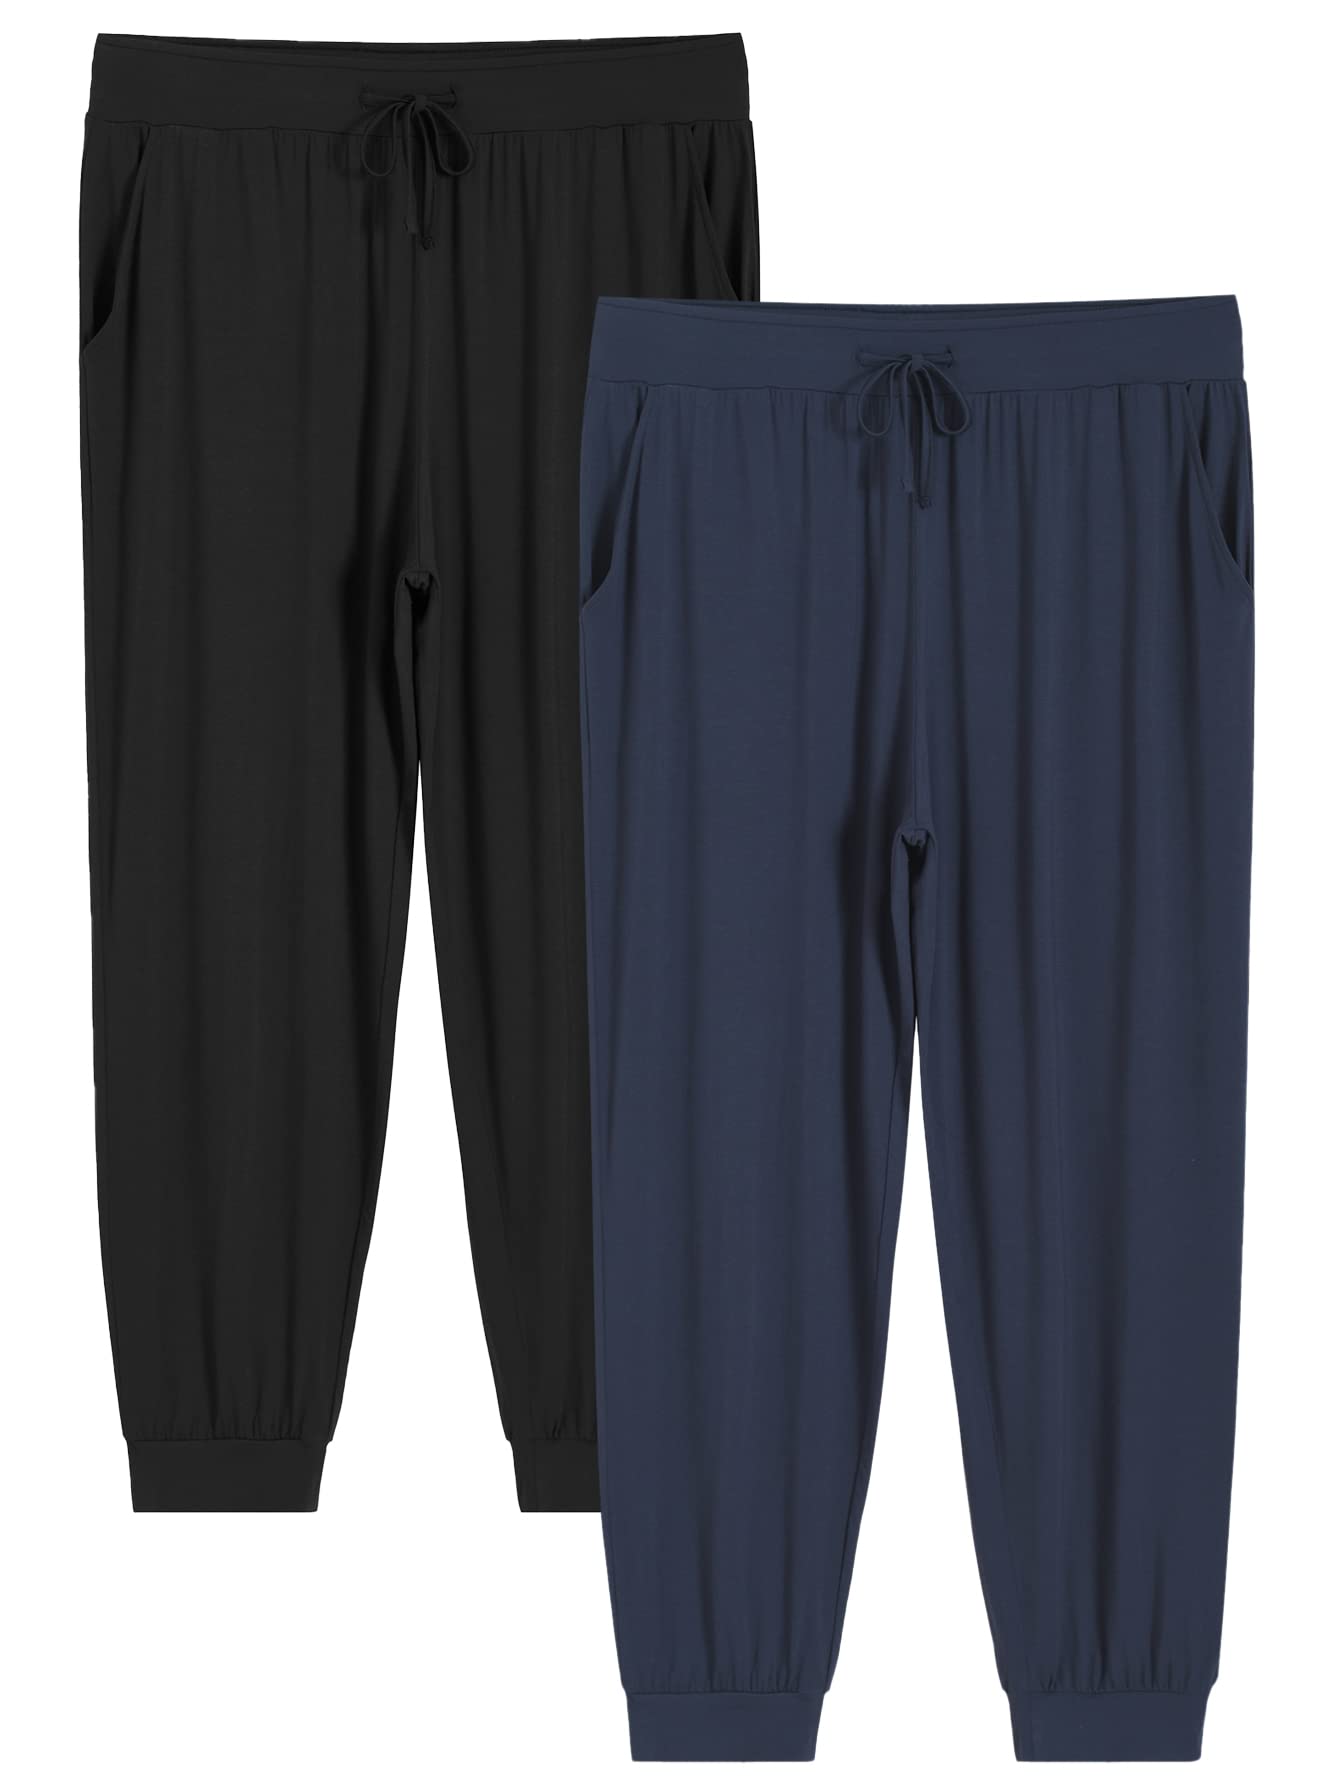 Women's Plus Size Jogger Pajama Pants Comfy Lounge Pants with Pockets